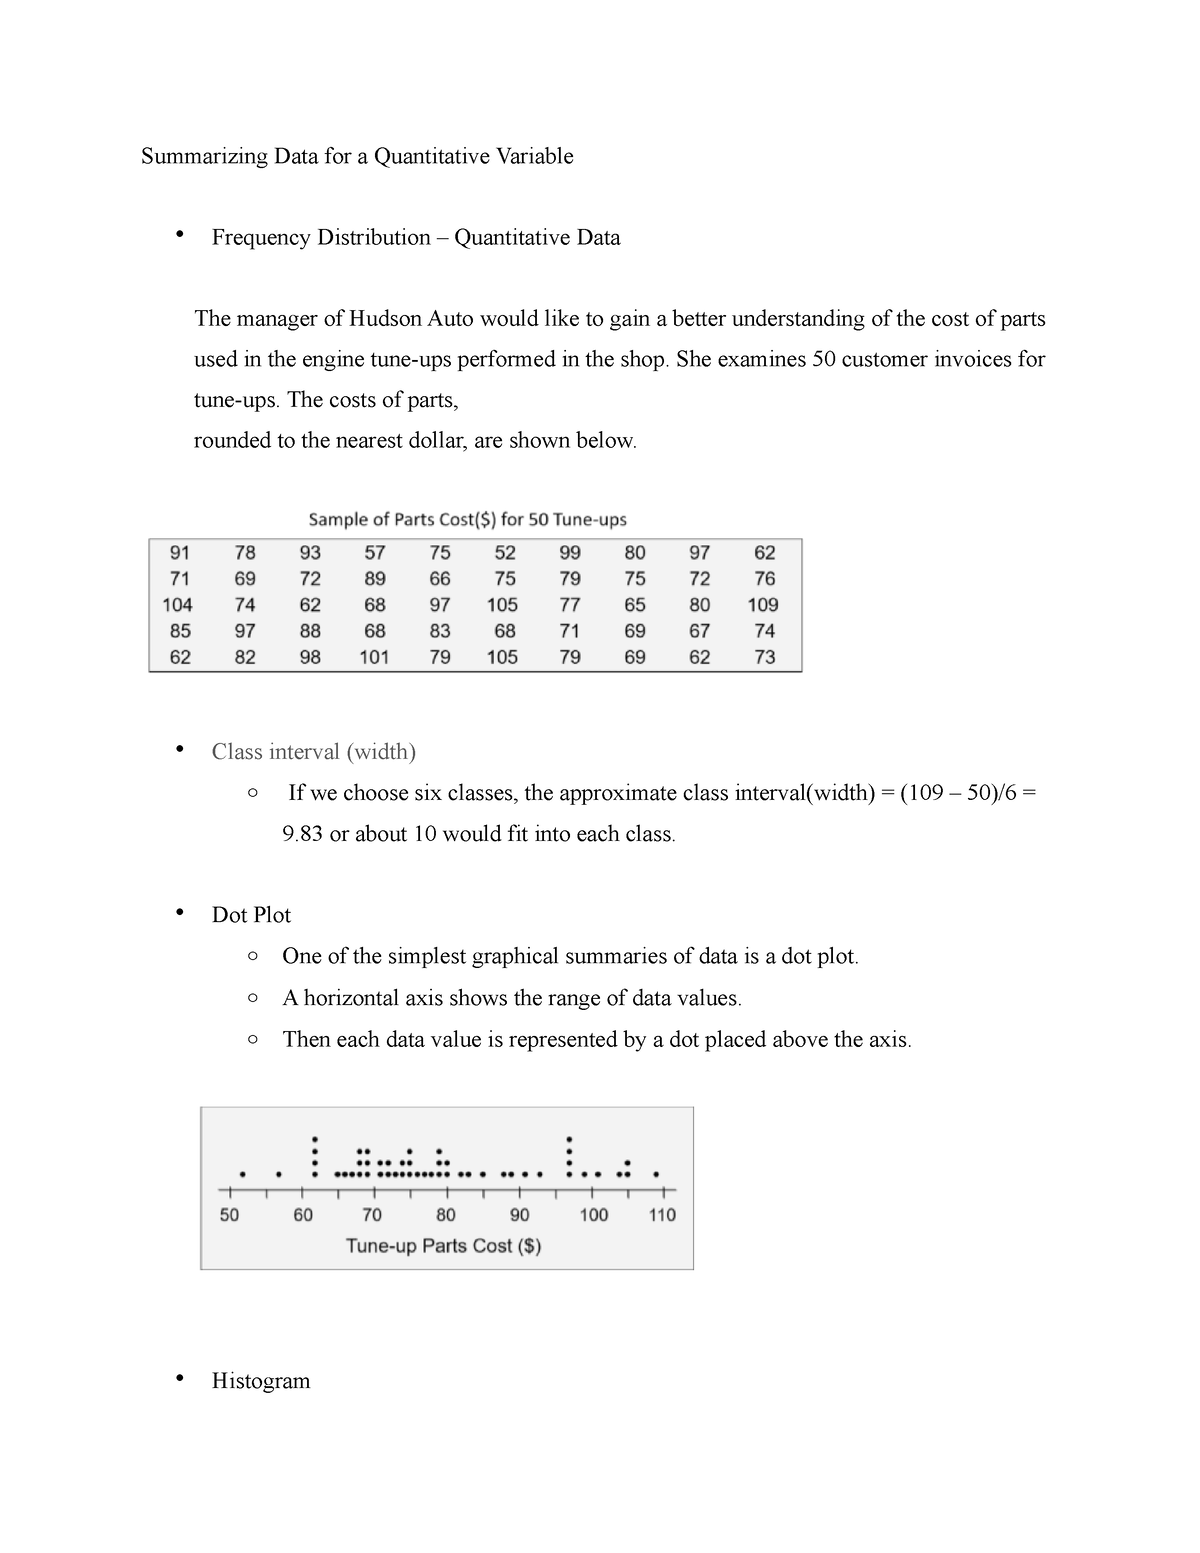 summarizing-data-for-a-quantitative-variable-she-examines-50-customer-invoices-for-tune-ups